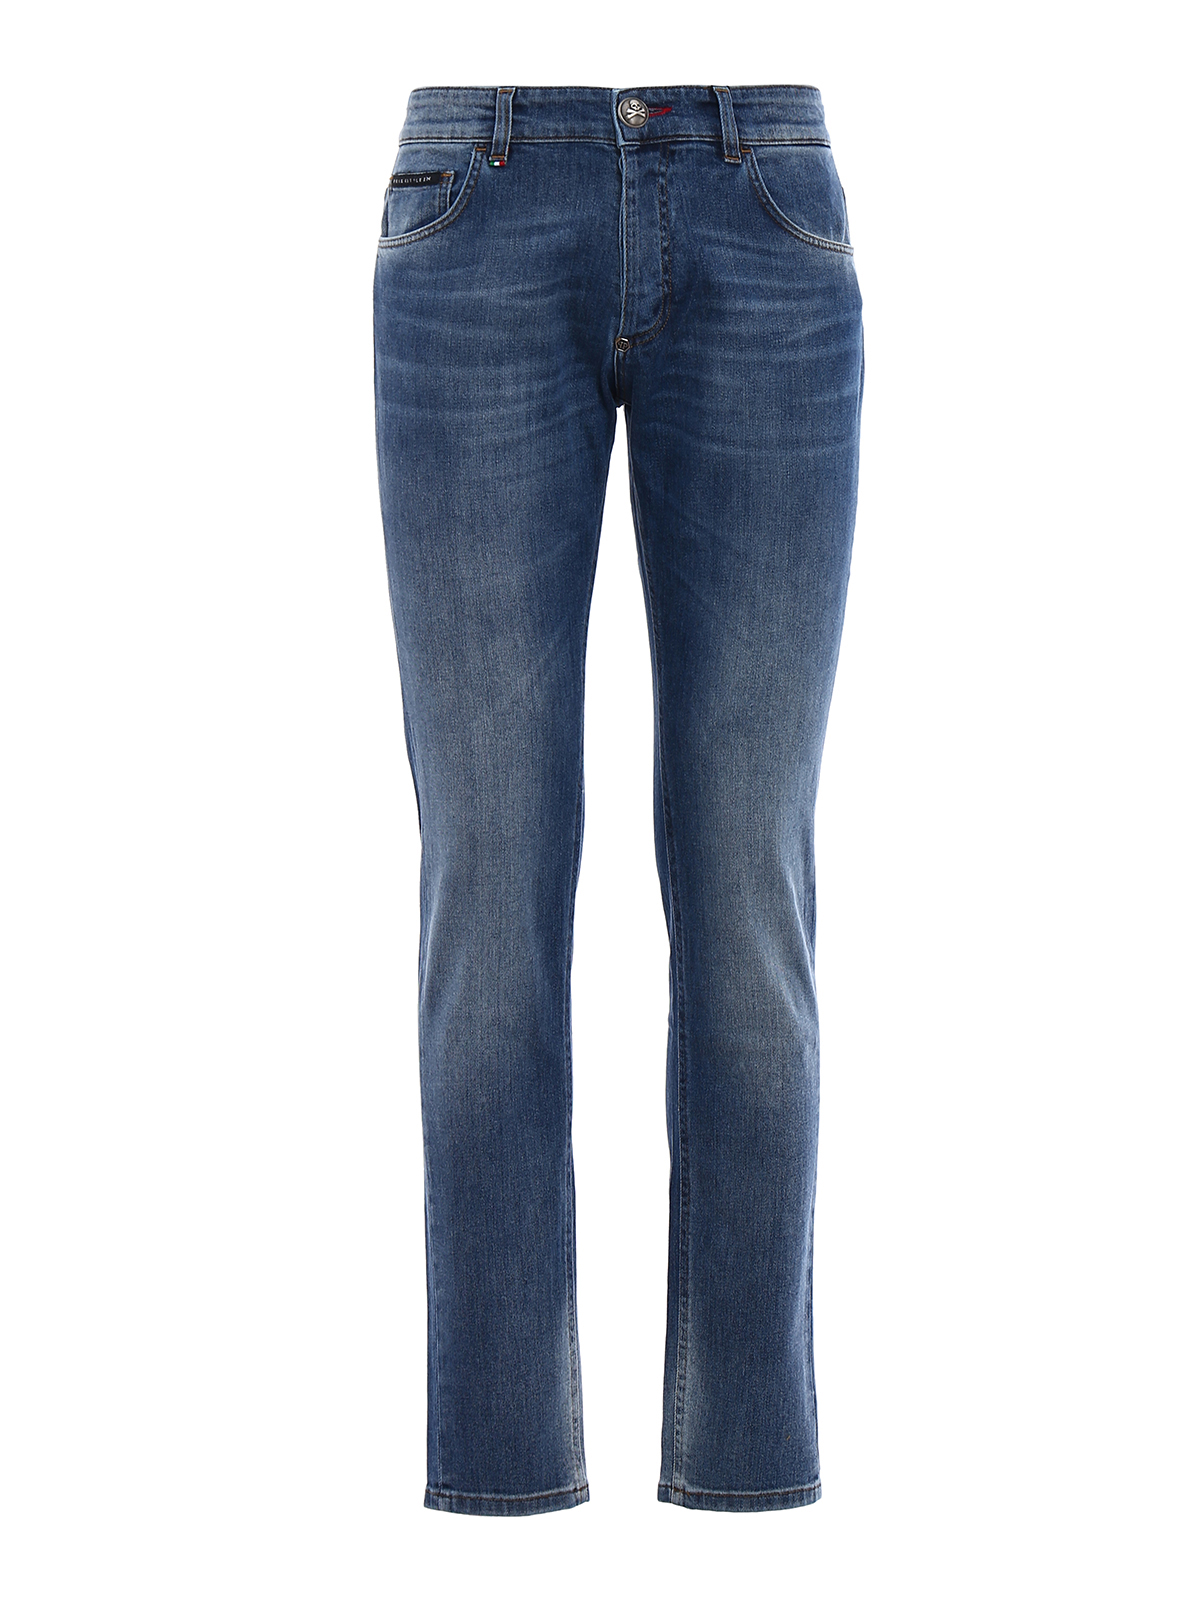 Straight leg jeans Philipp Plein - Worth faded blue denim jeans ...